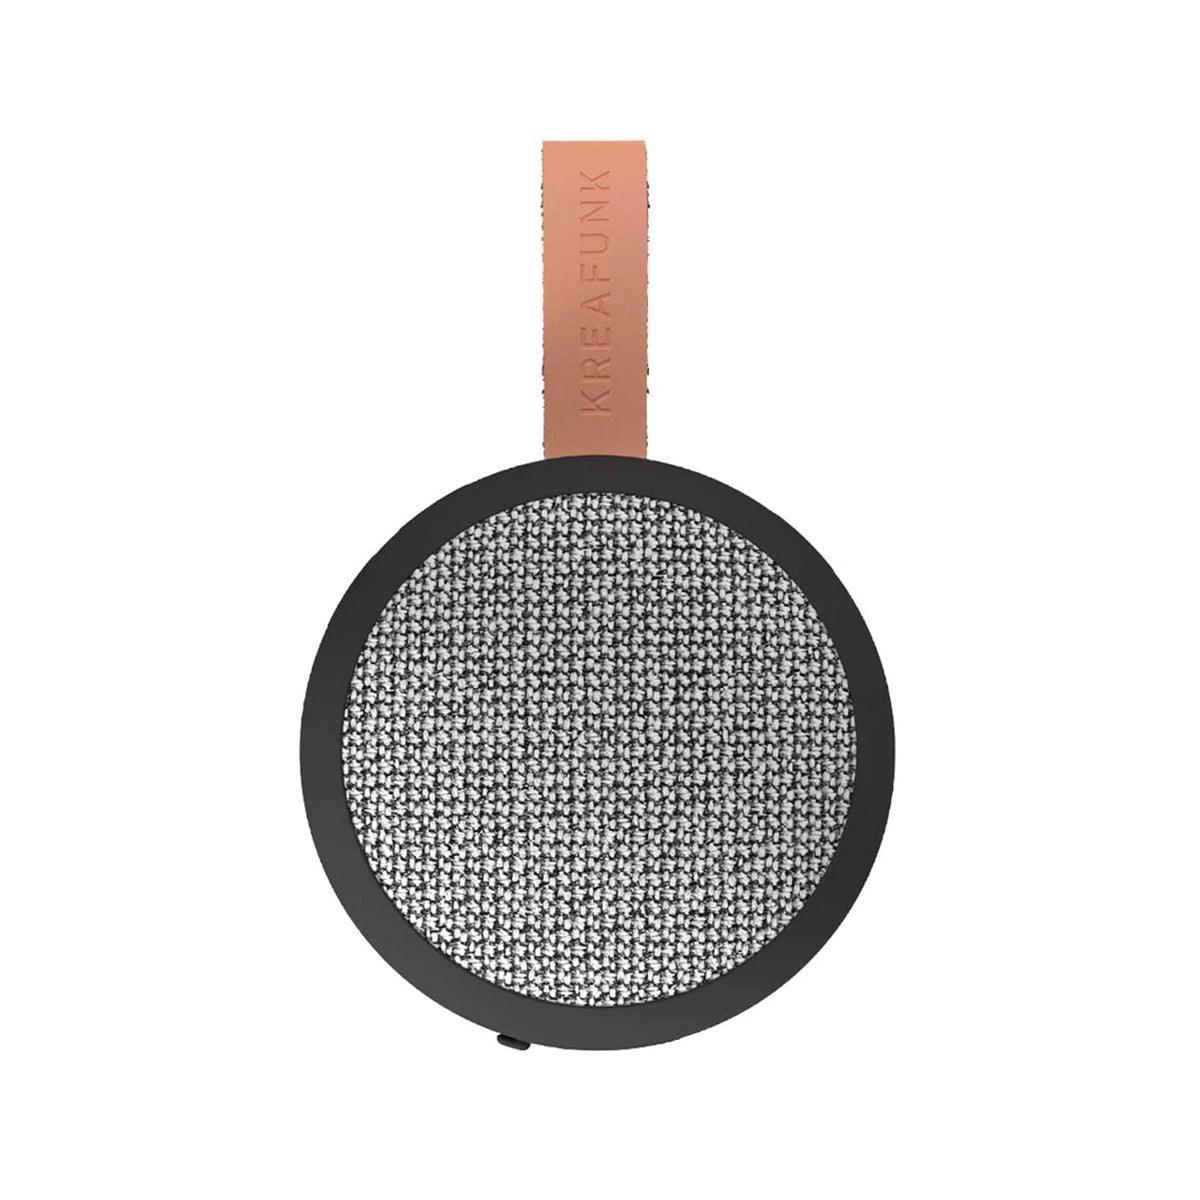 Ago 2 Fabric Bluetooth Speaker - Black - Humble & Grand Homestore